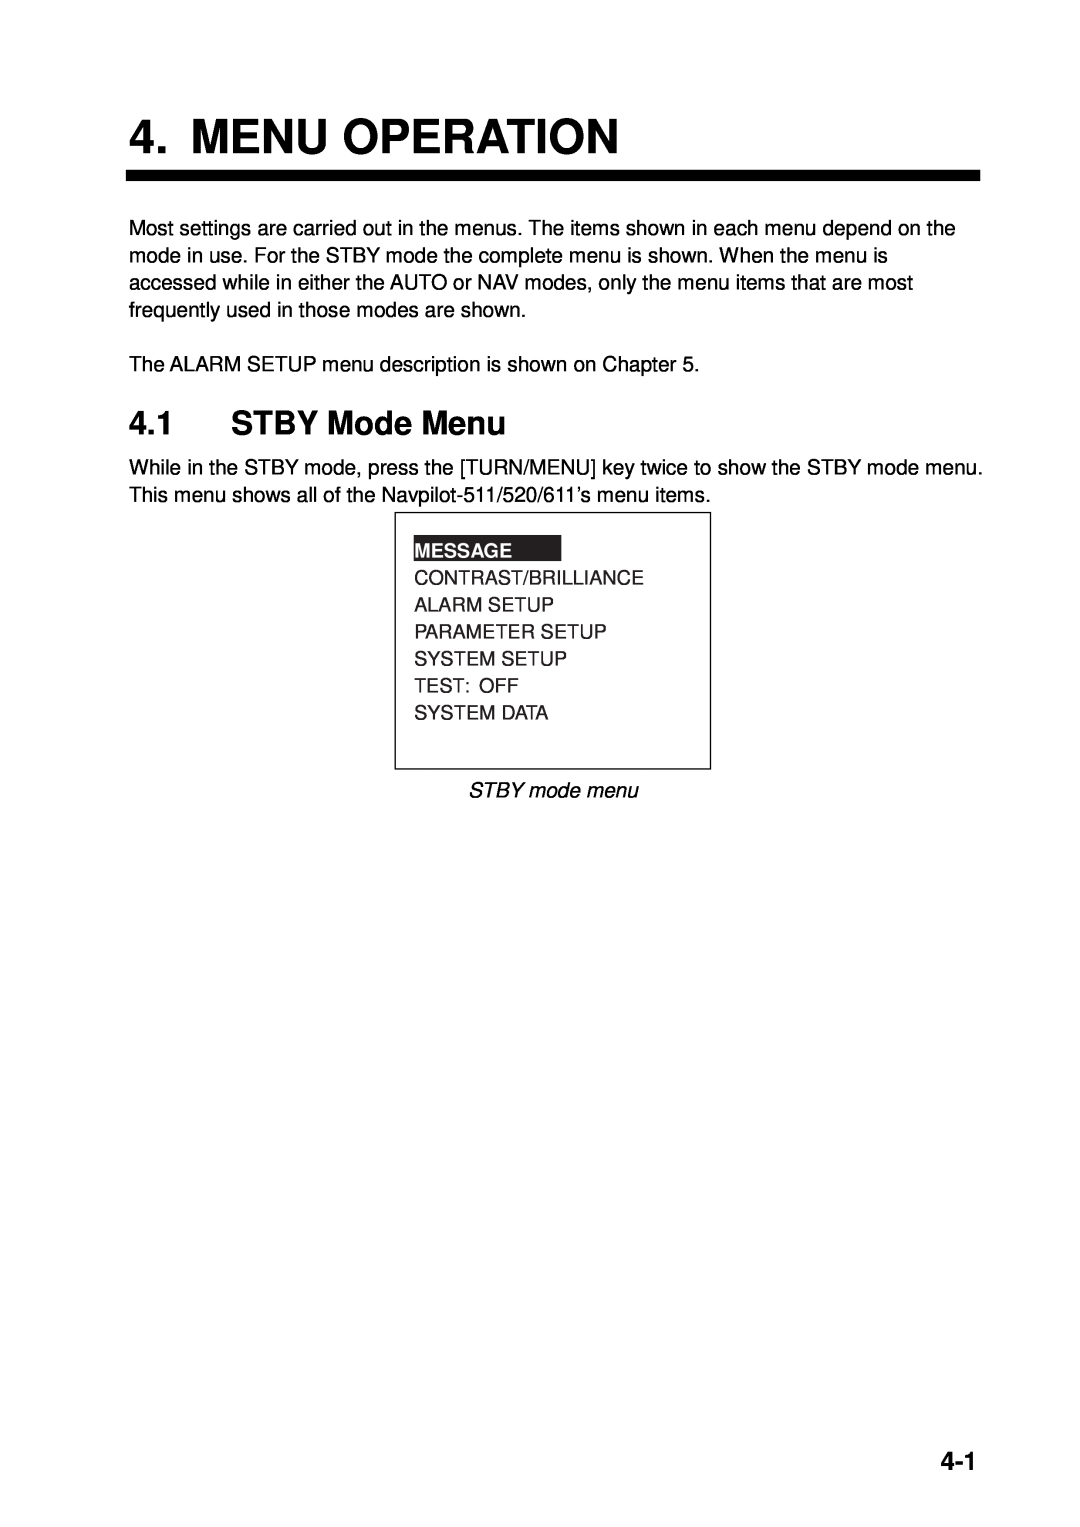 Furuno 511, 520, 611 manual Menu Operation, STBY Mode Menu, Message, STBY mode menu 